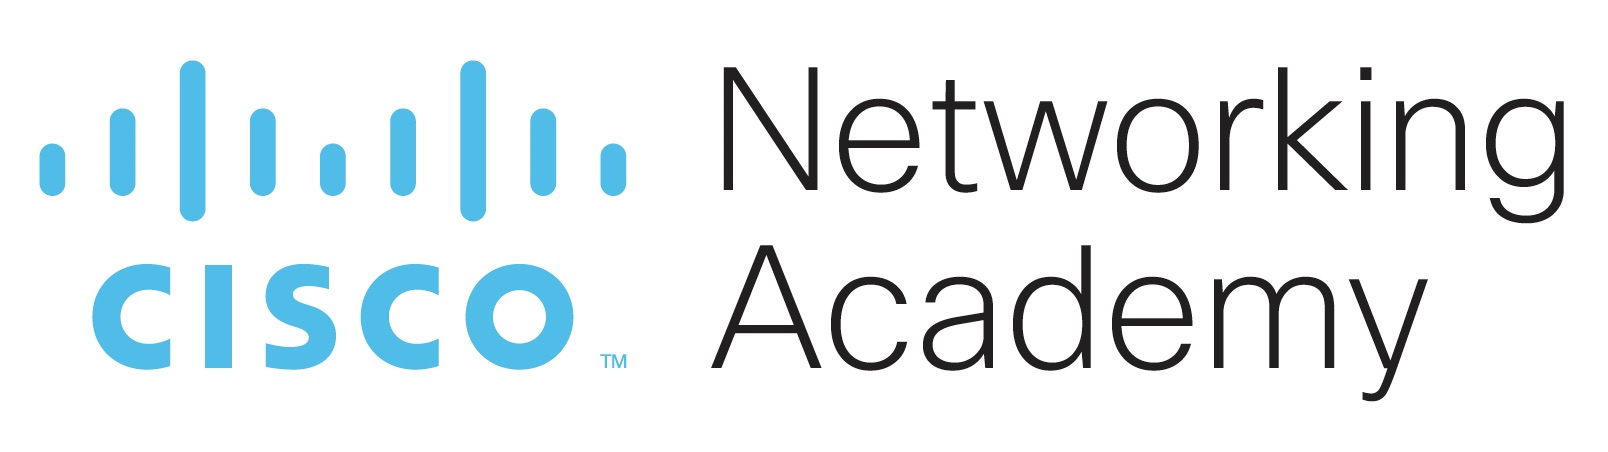 Cisco_academy_logo